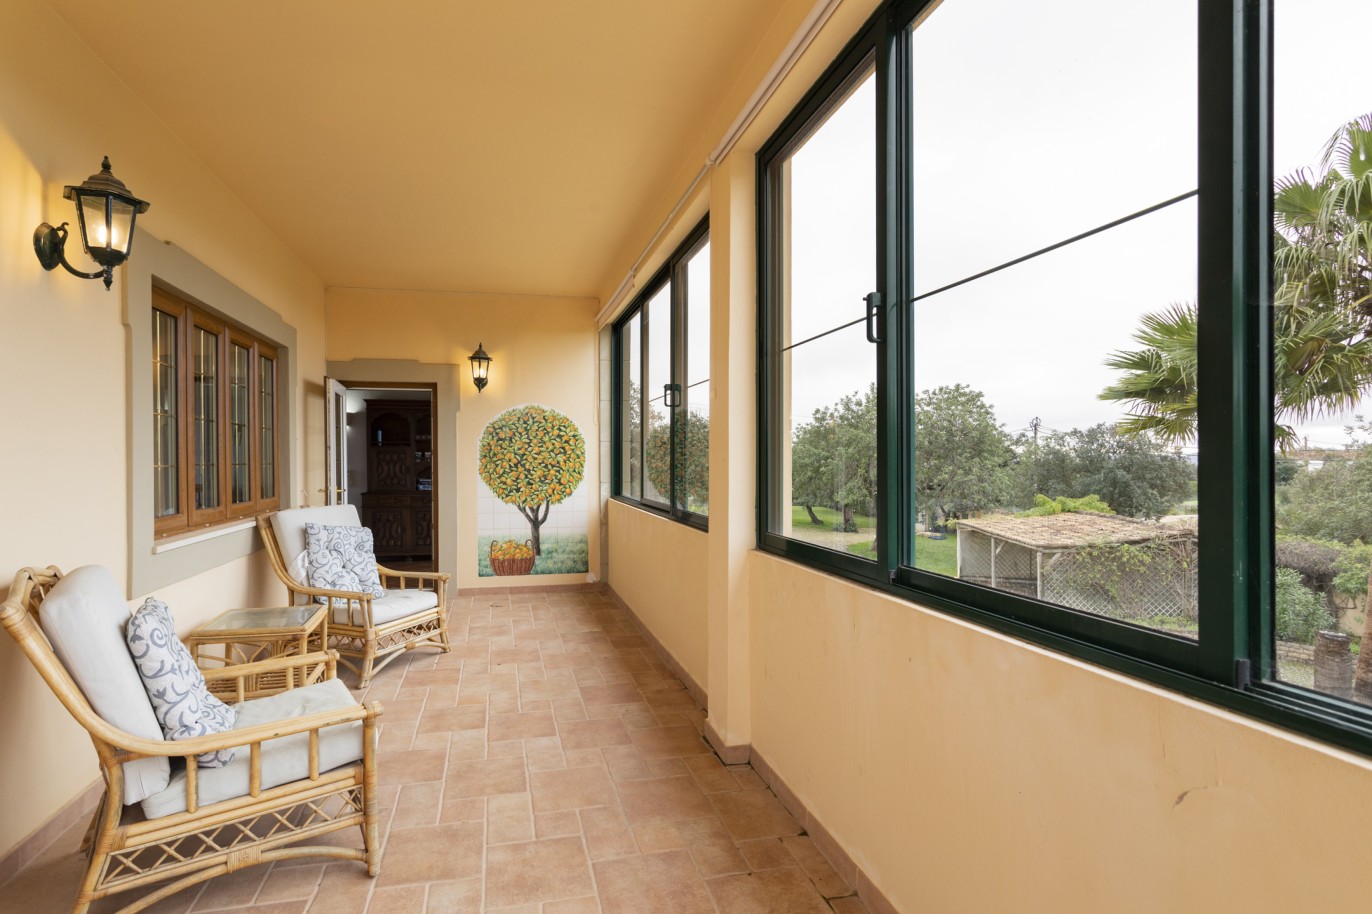 4 Bedroom Villa with swimming pool for sale in Loulé, Algarve_214795